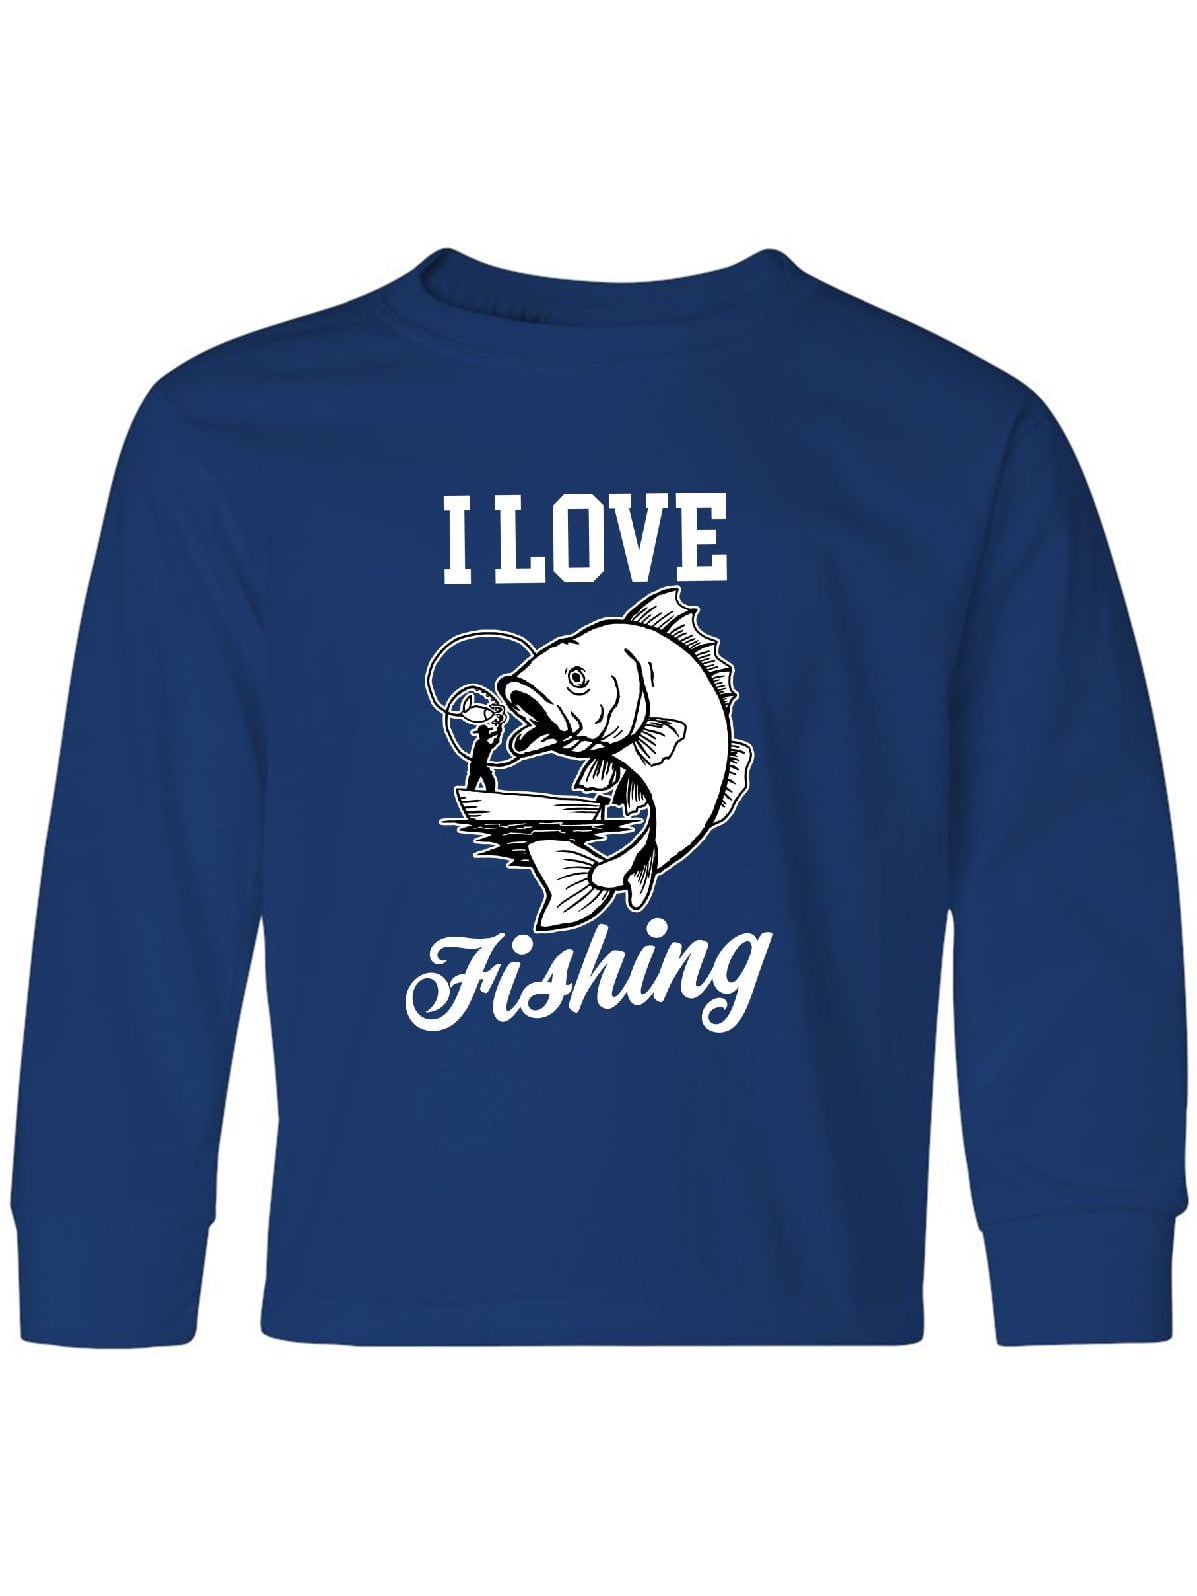 Catfish Shirt, Catfish Queen, Gift For Her, Women's Fishing Shirt, Fishing  Mom, Ladies Top, Funny Tees, Catfish Lover, Trendy T, 2020 Tee, Heather